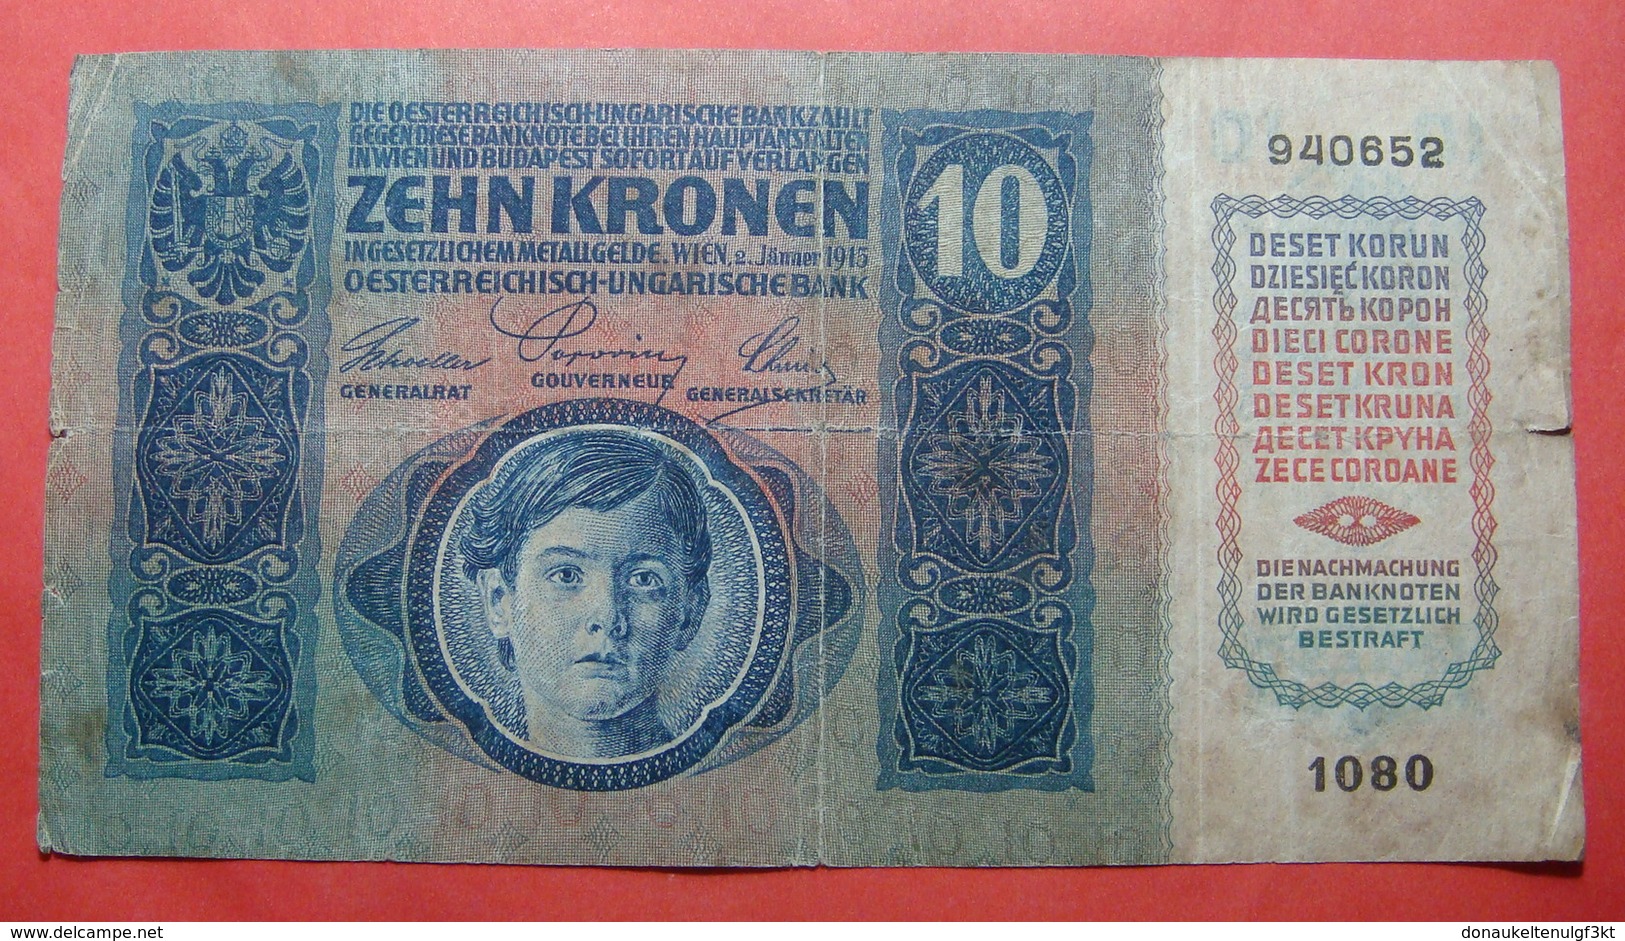 AUSTRIA 10 KRONEN 1915, Serial Number: 940652 - 1080 - Autriche